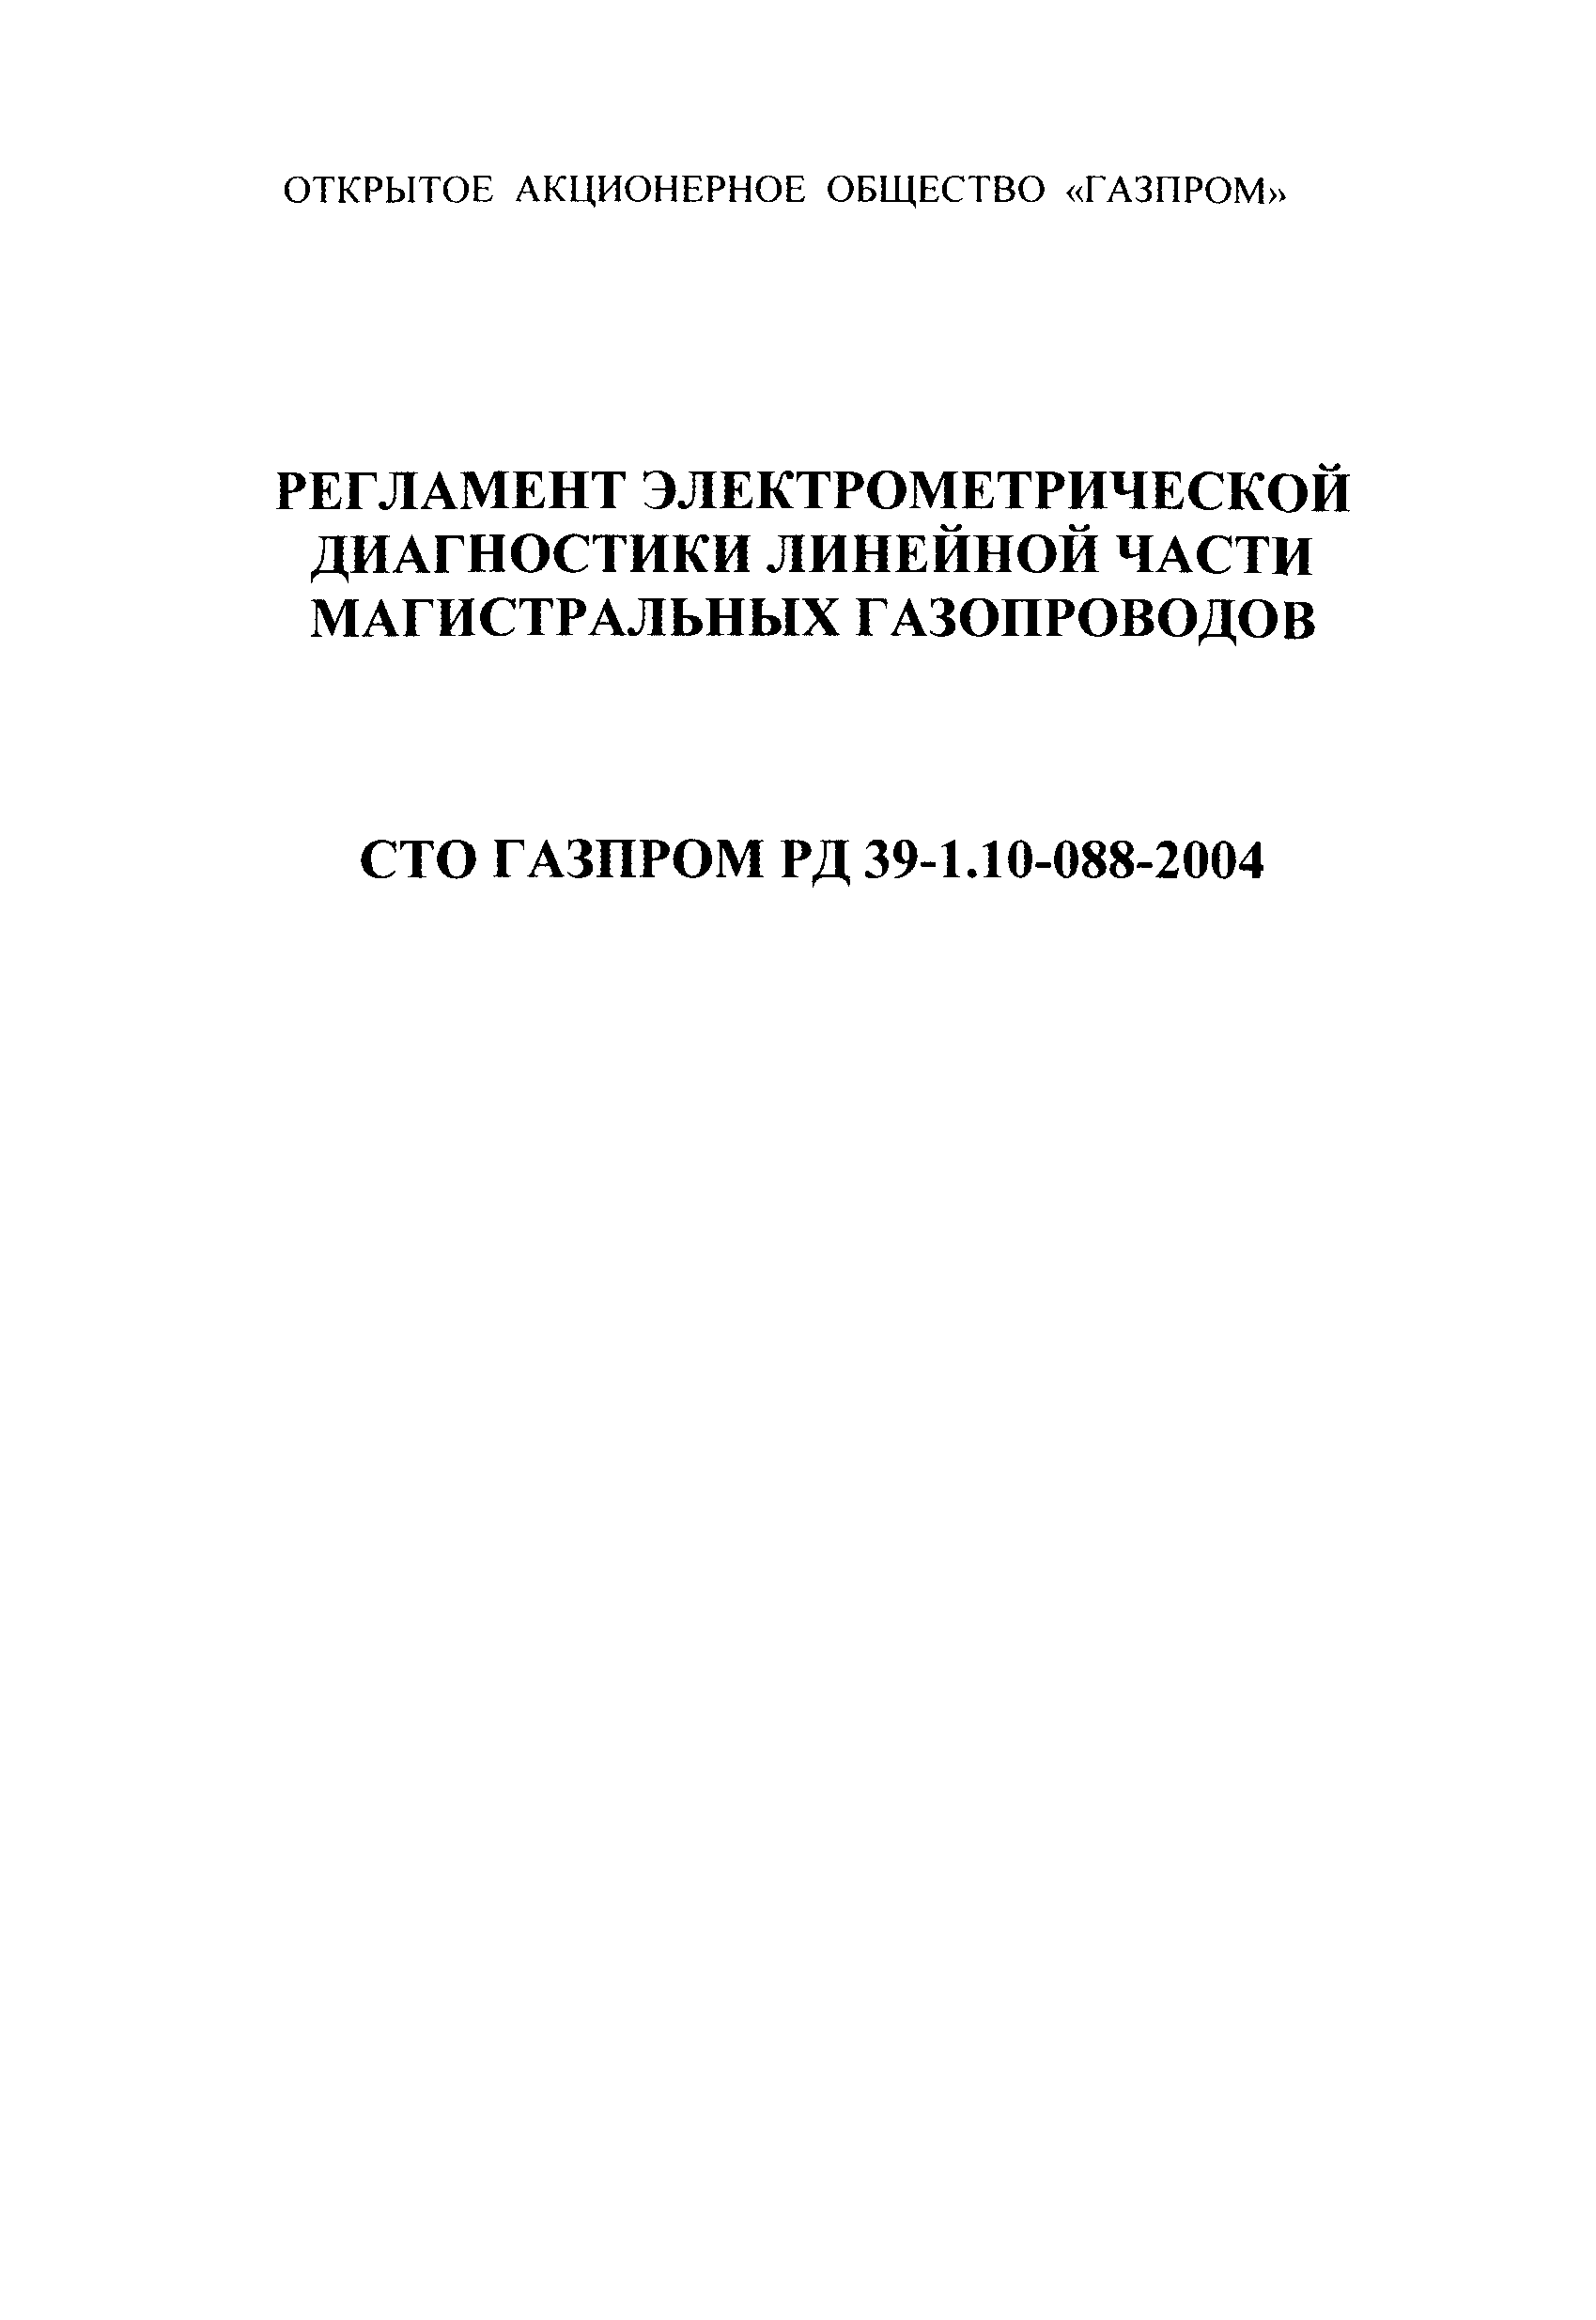 СТО Газпром РД 39-1.10-088-2004